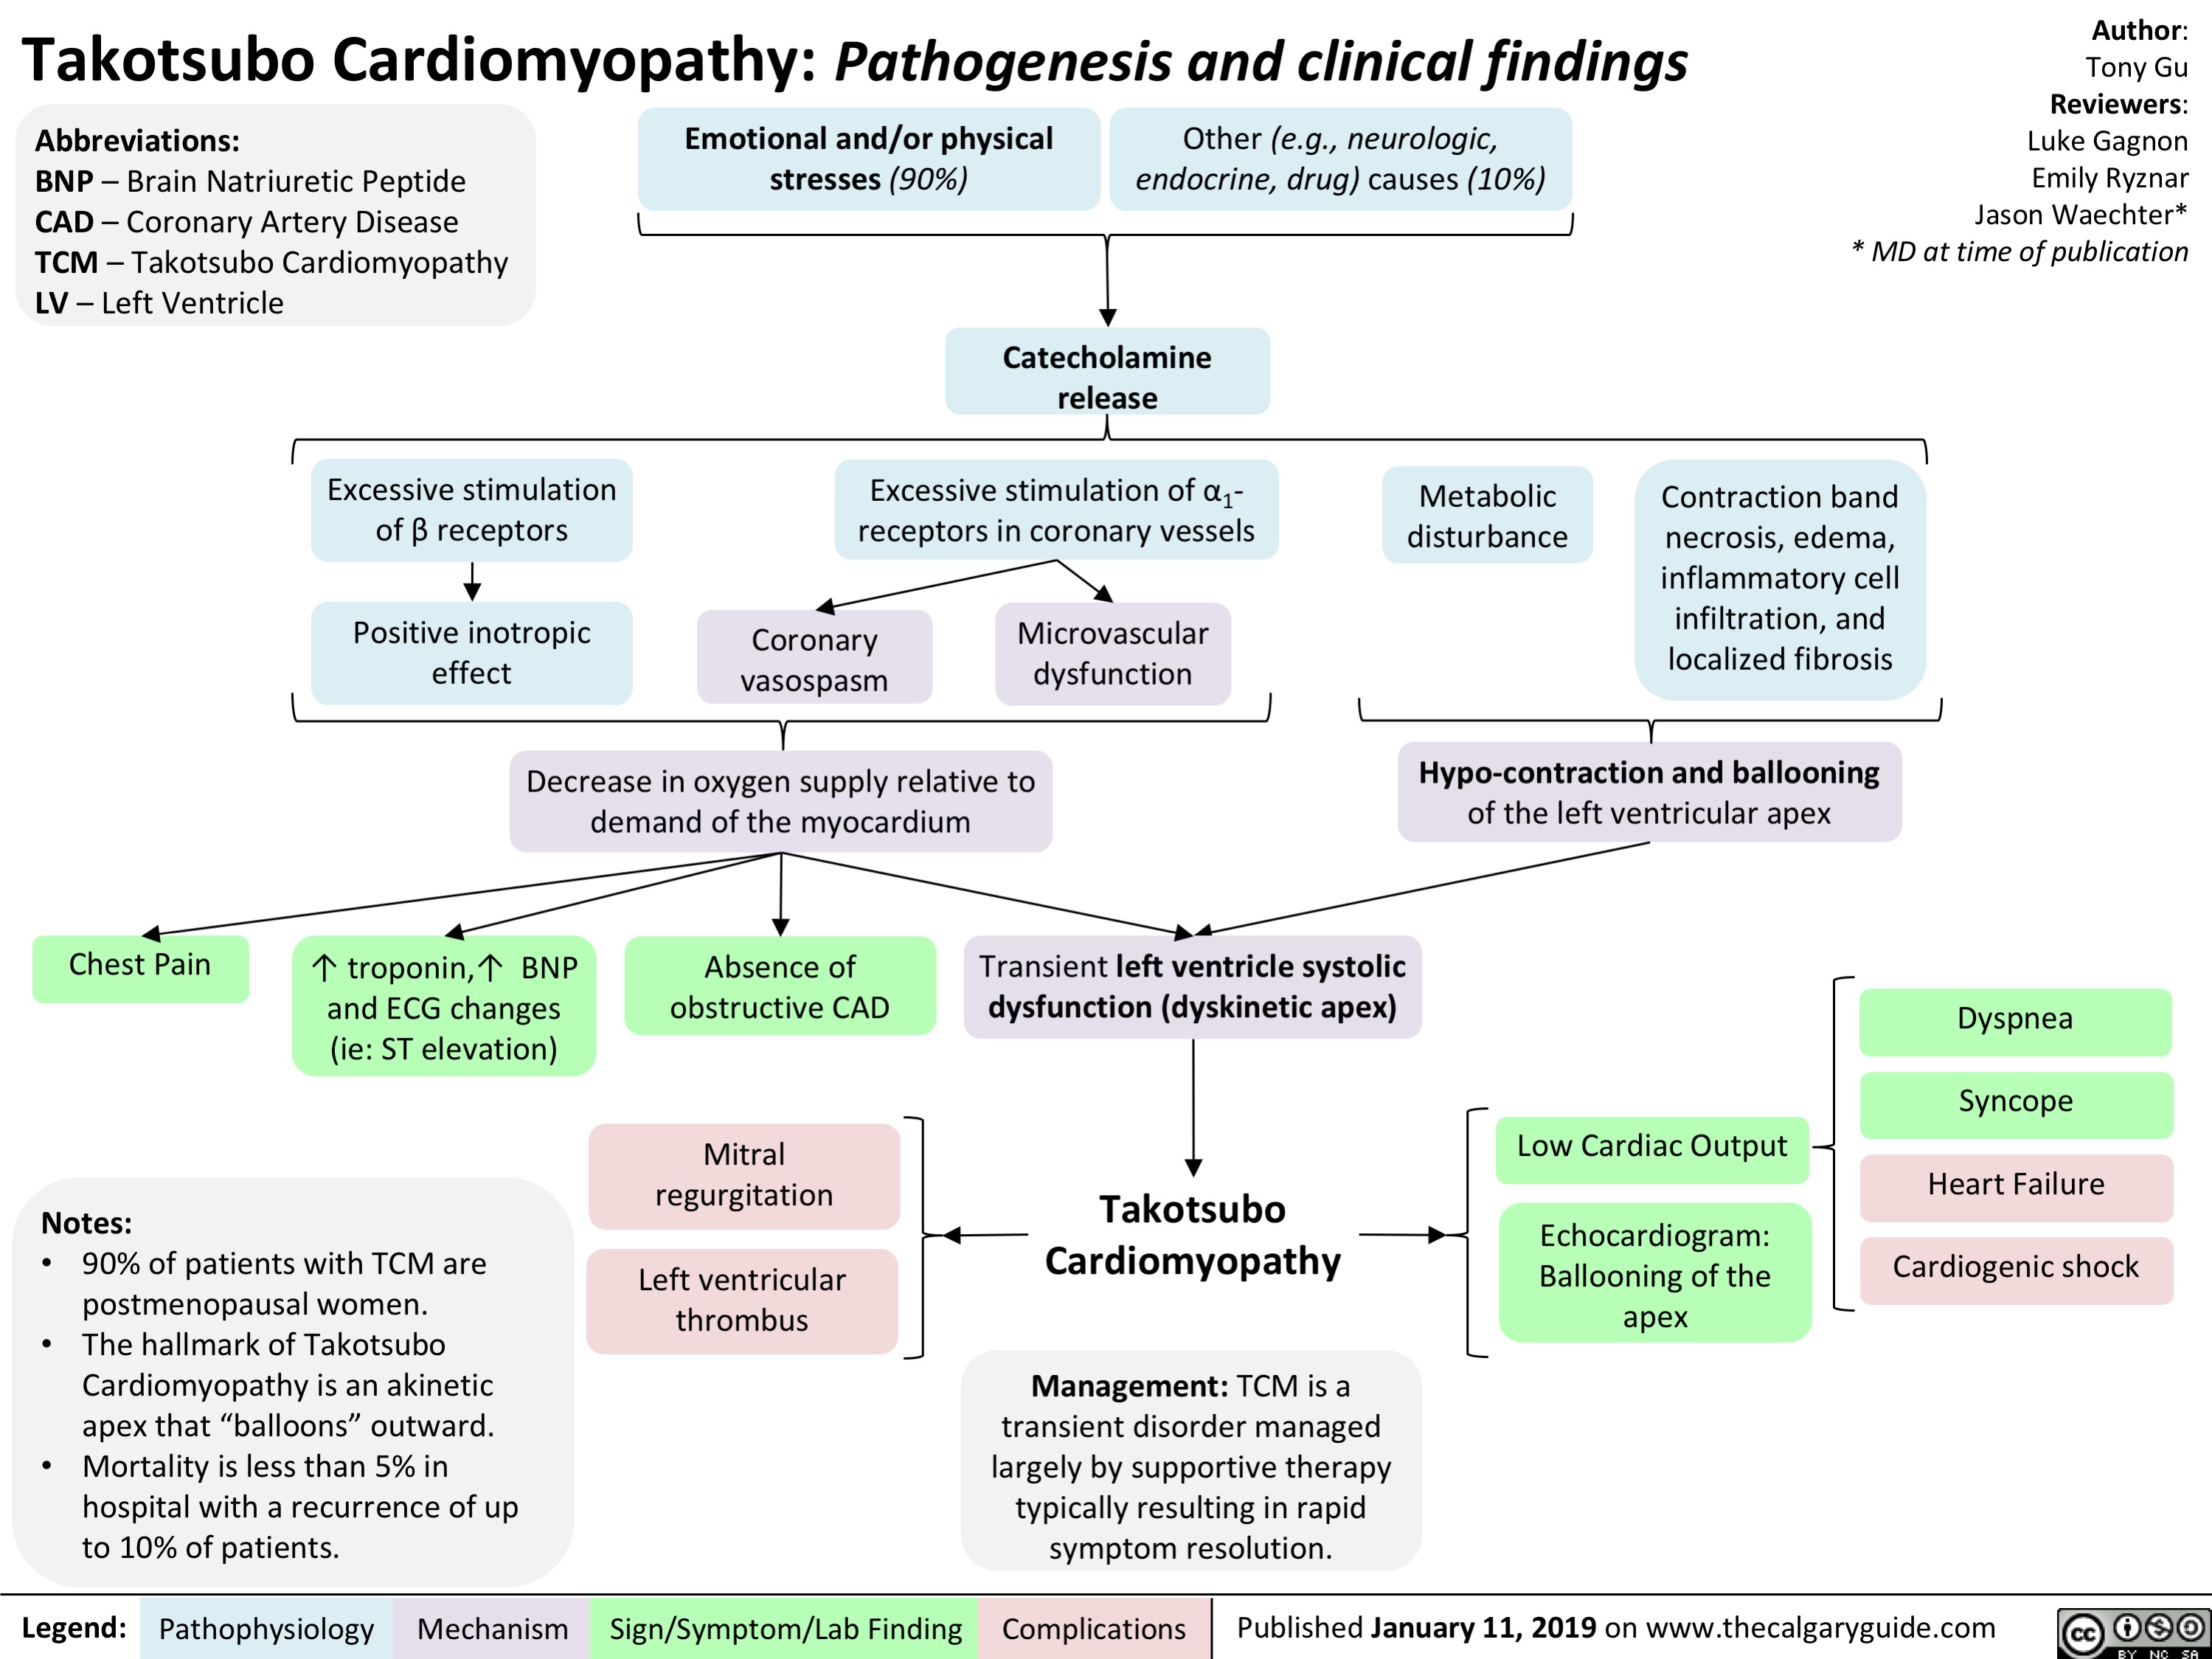 takotsubo cardiomyopathy causes